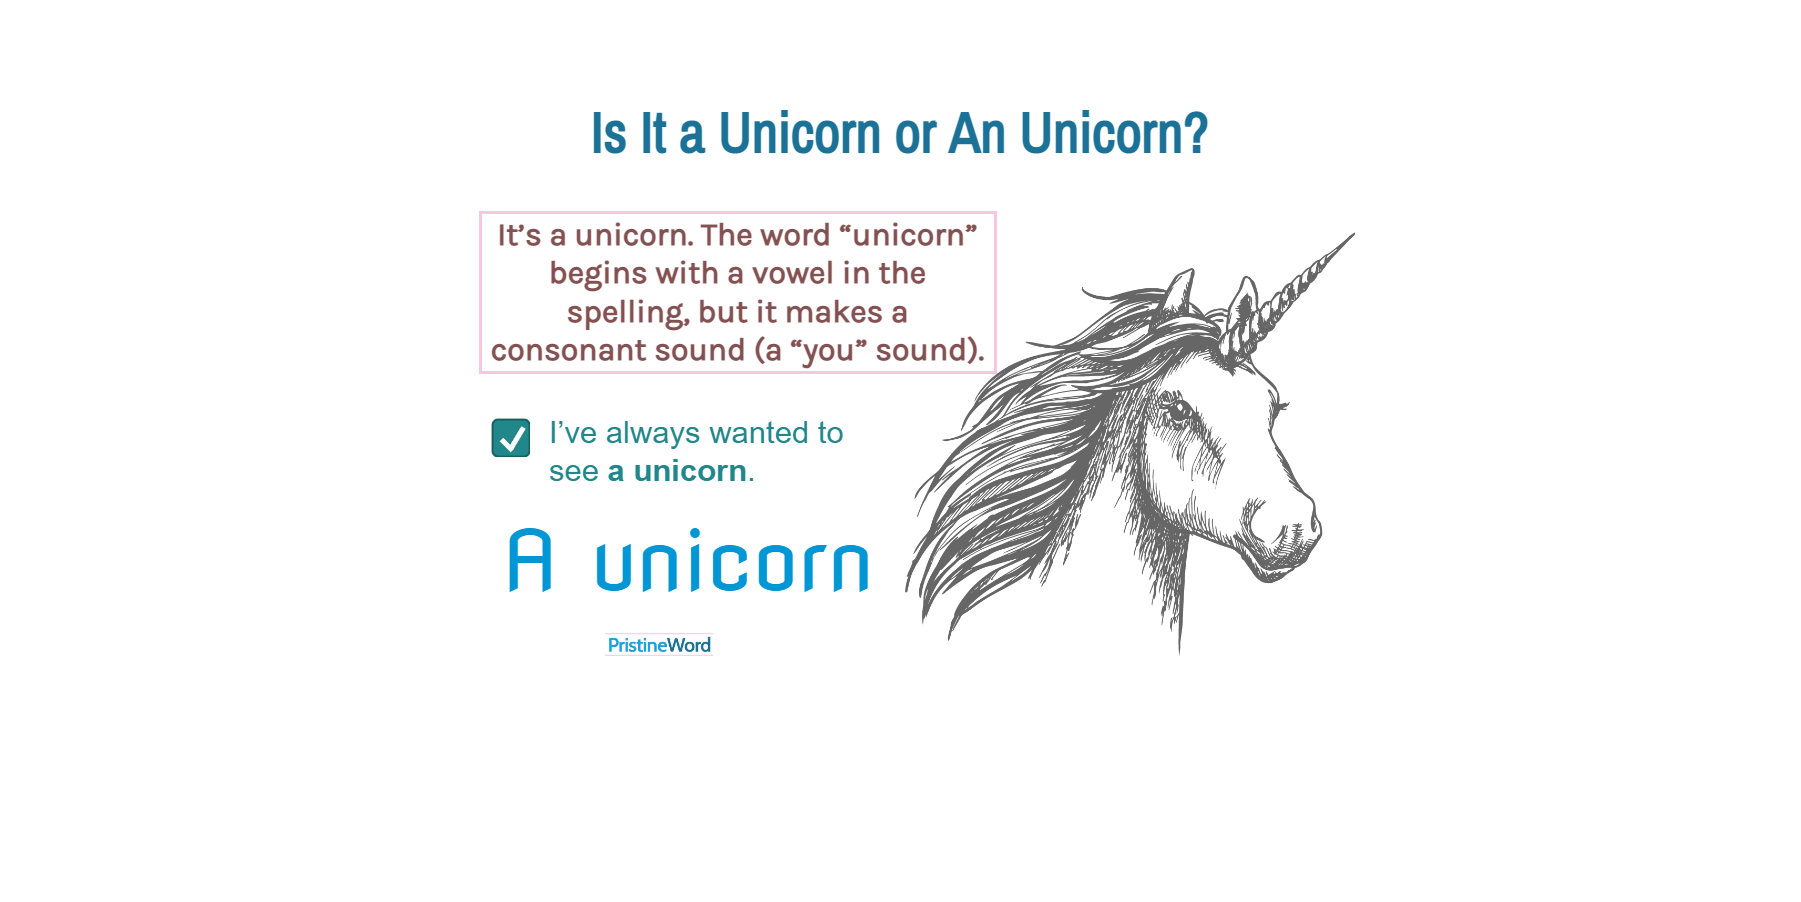 Is It a Unicorn or an Unicorn?